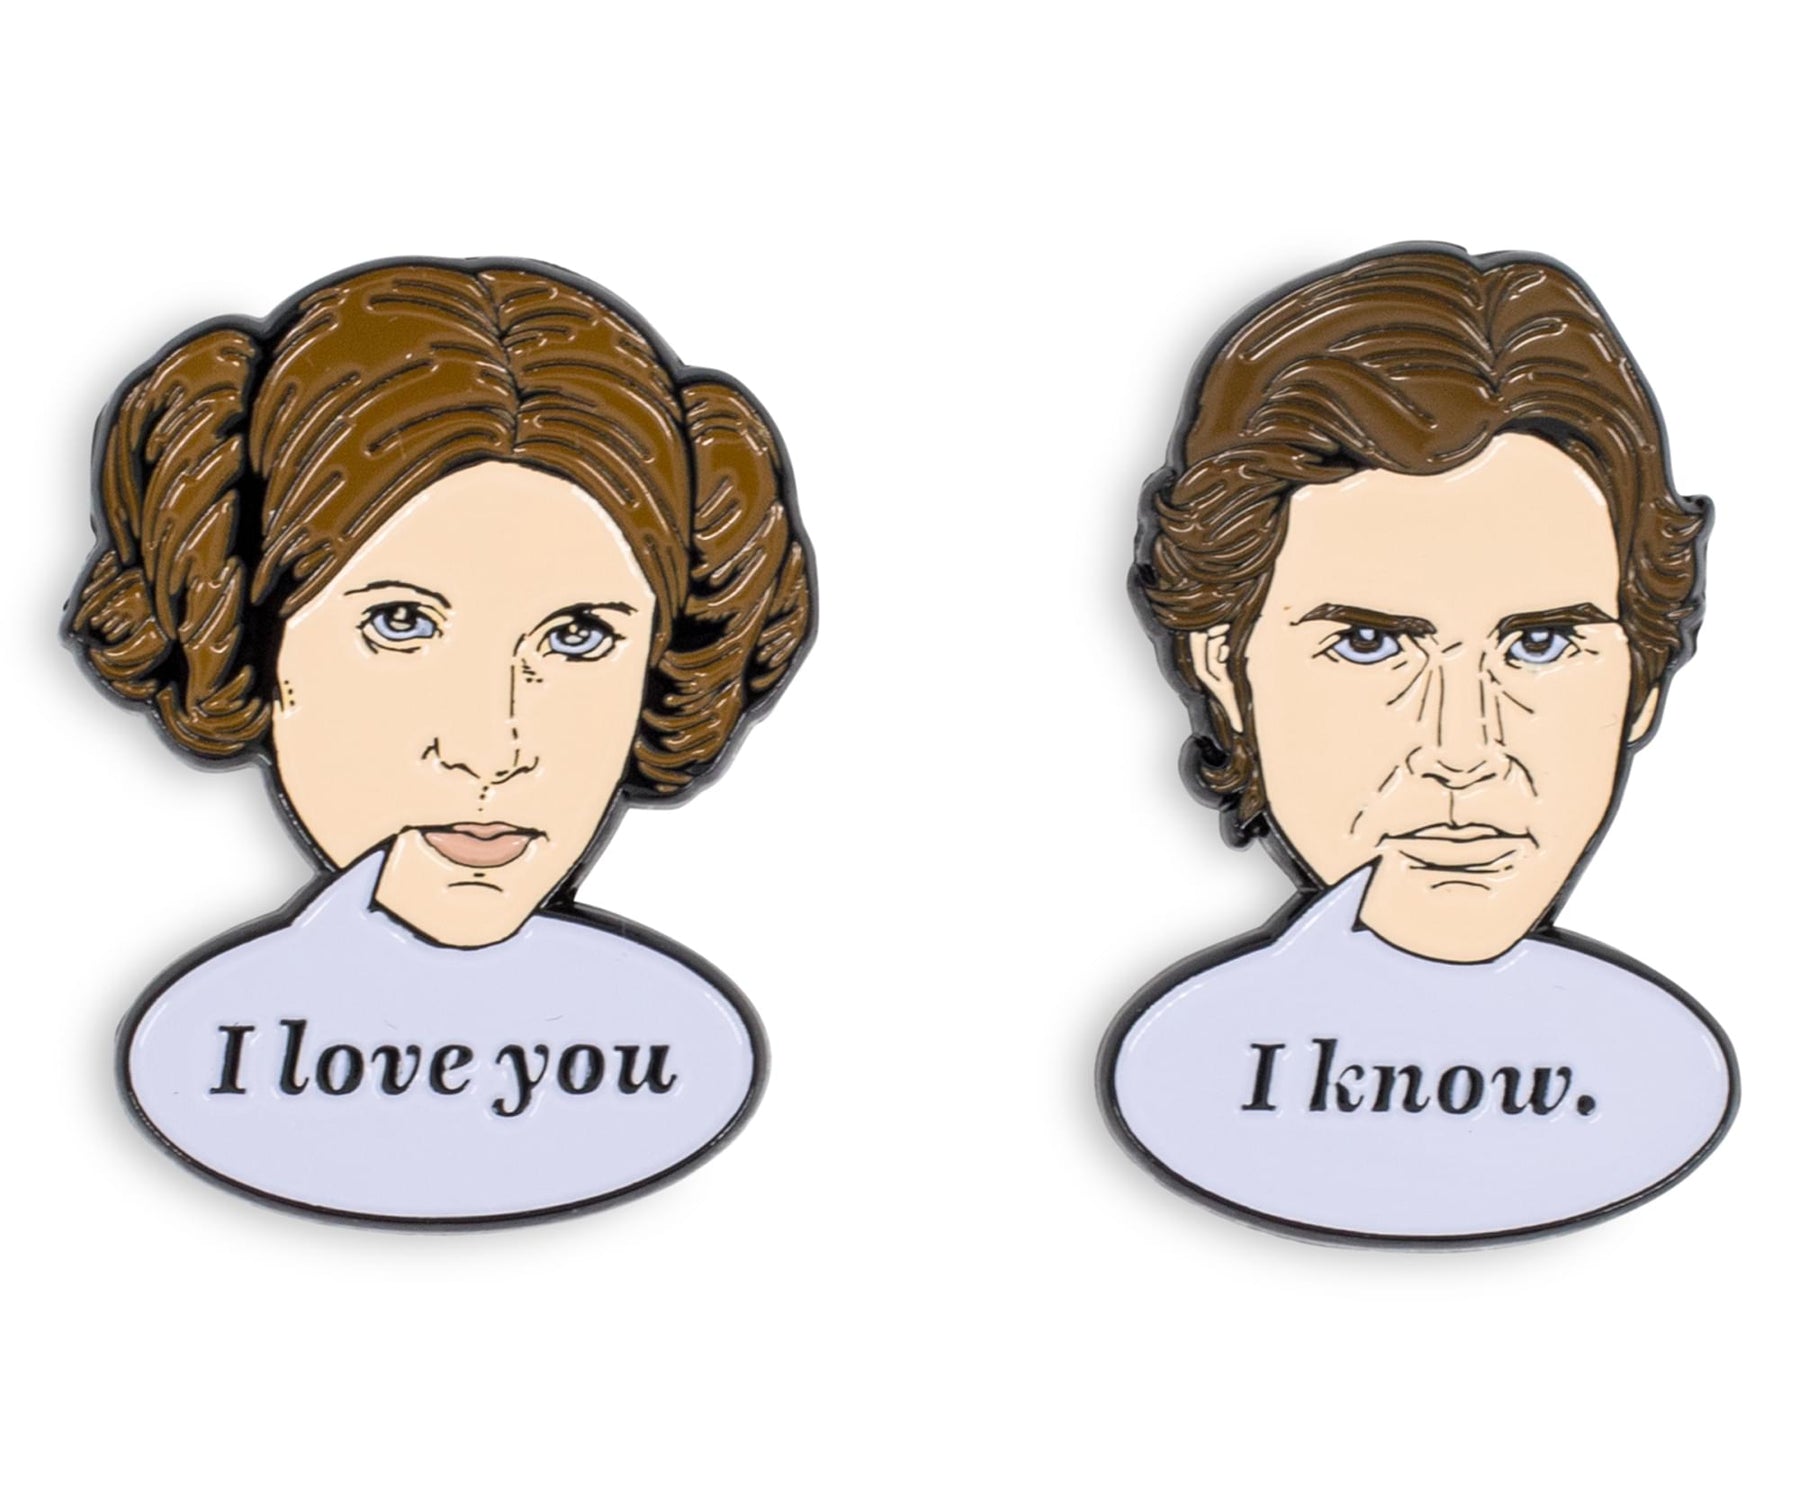 Star Wars Han Solo & Princess Leia Collector Pins | I Love You, I Know Pin Set